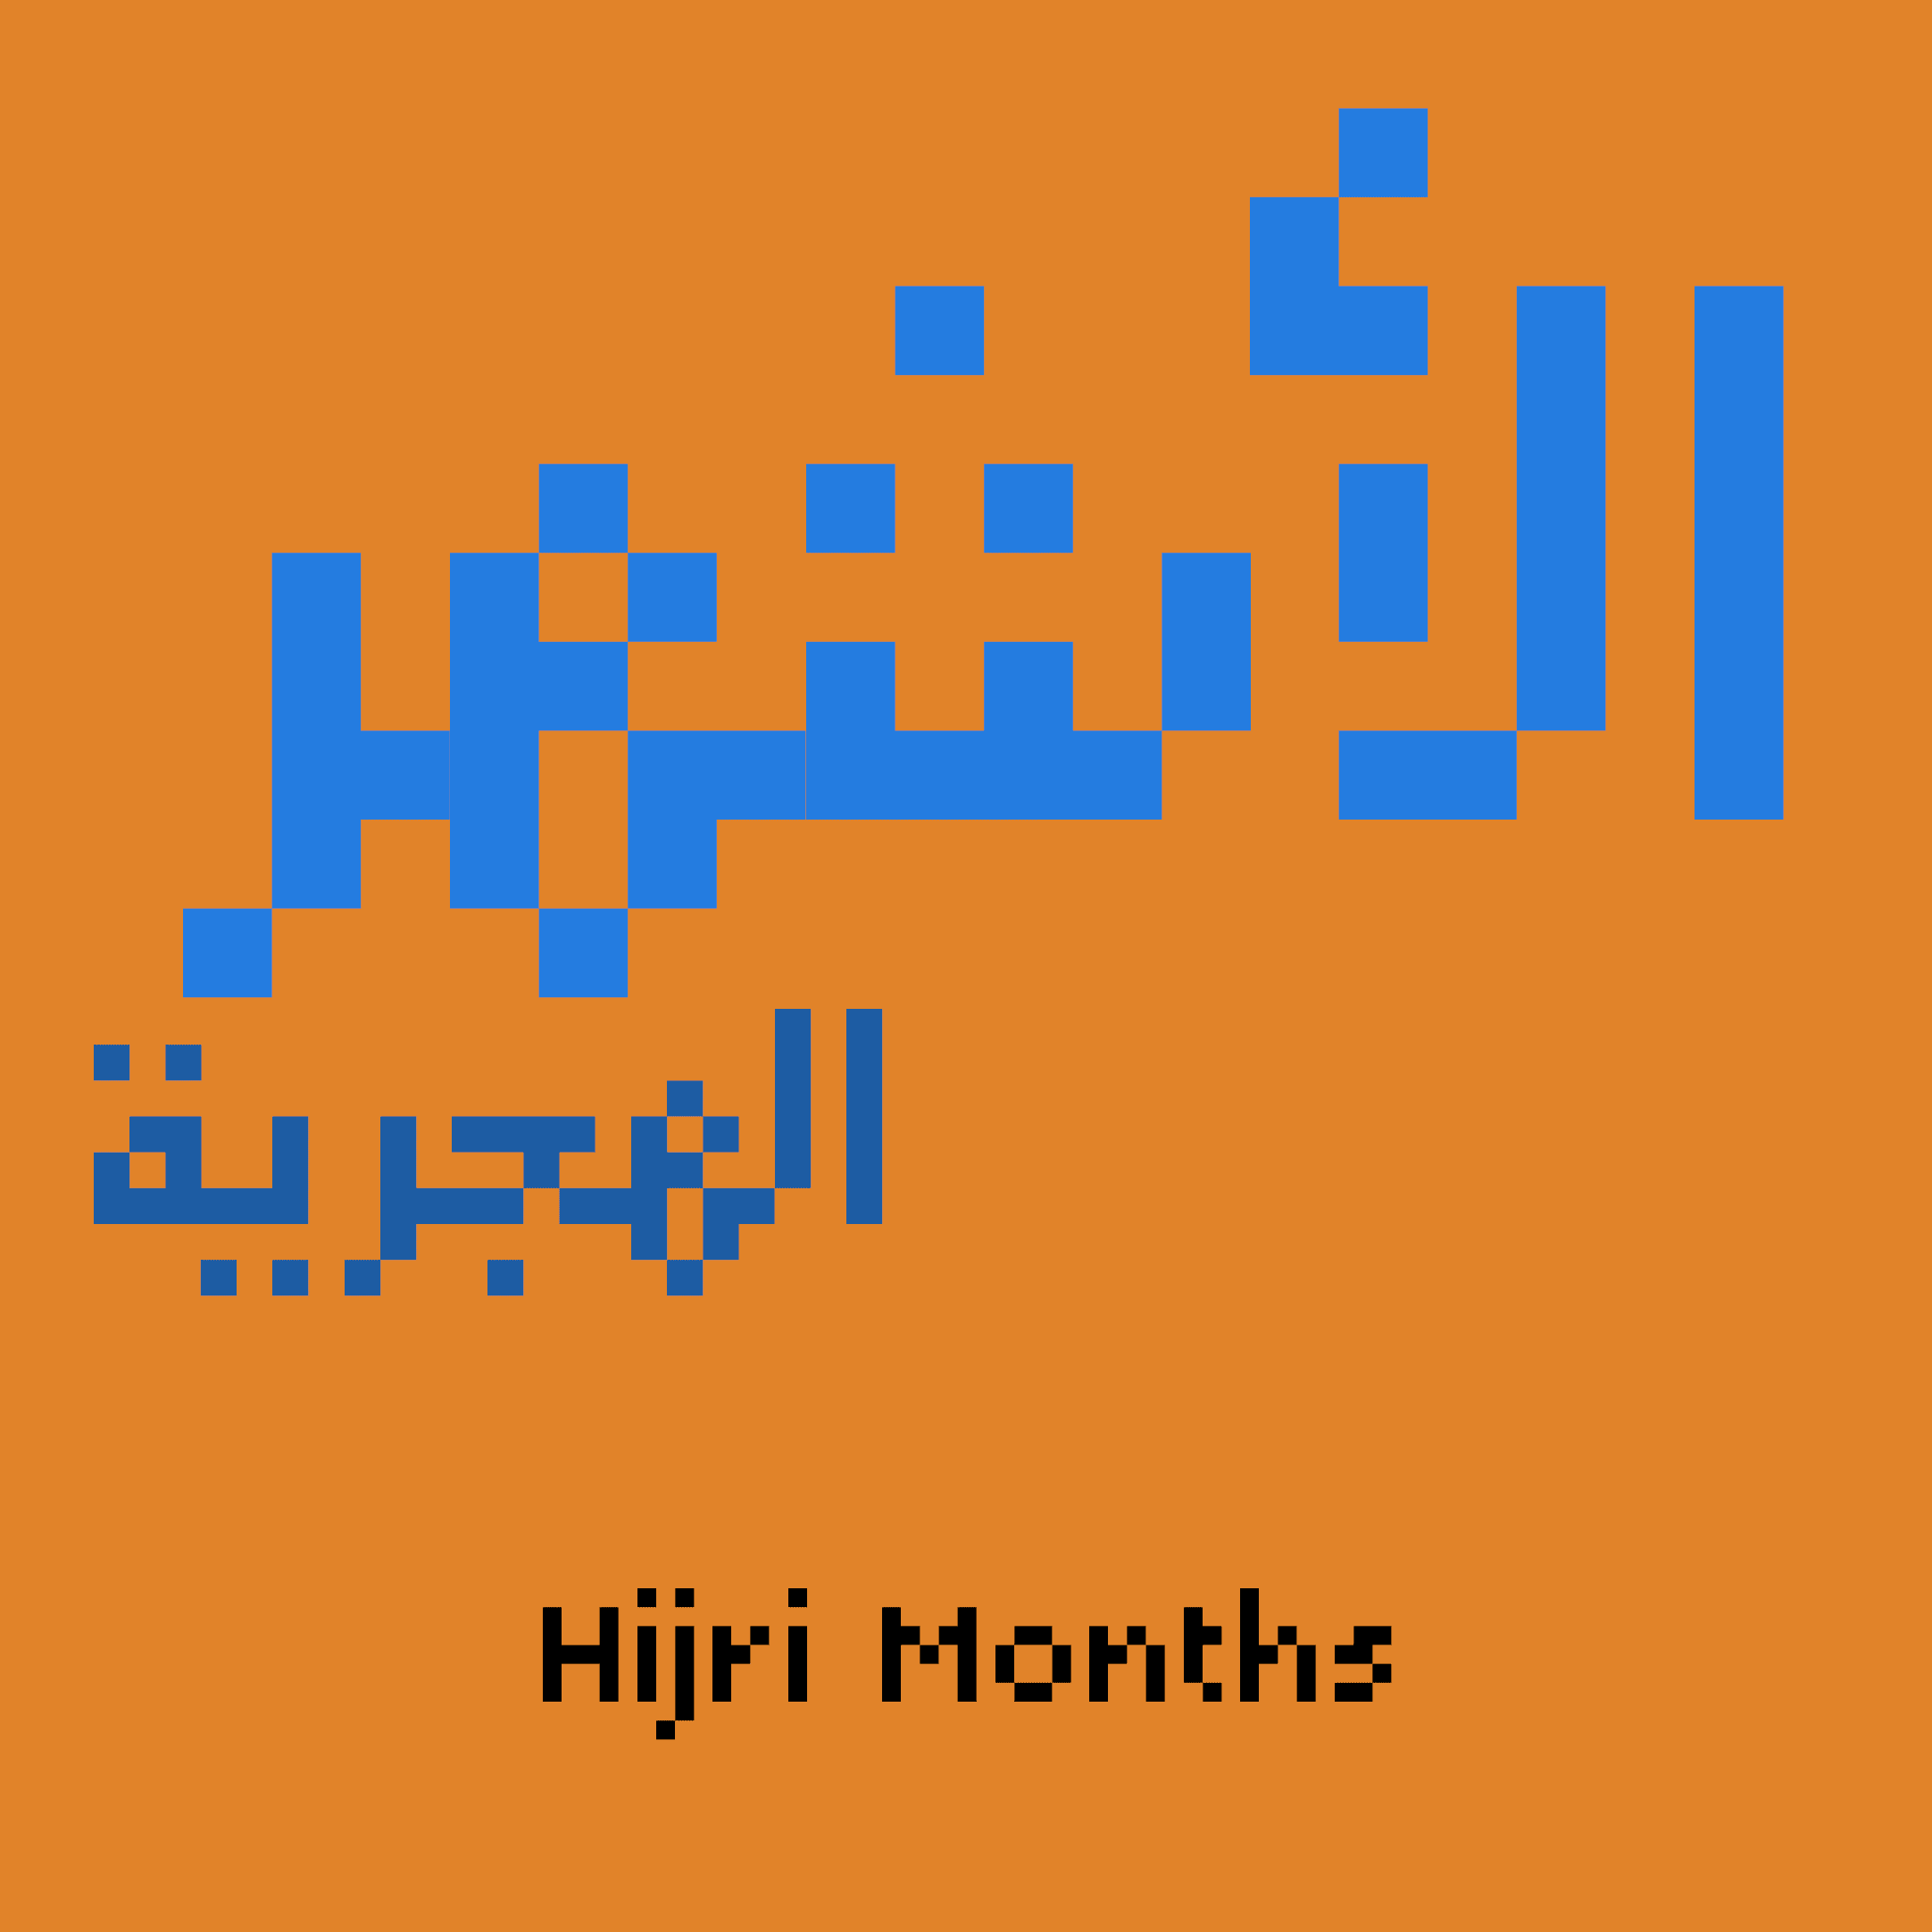 hijri-months-sammlung-opensea